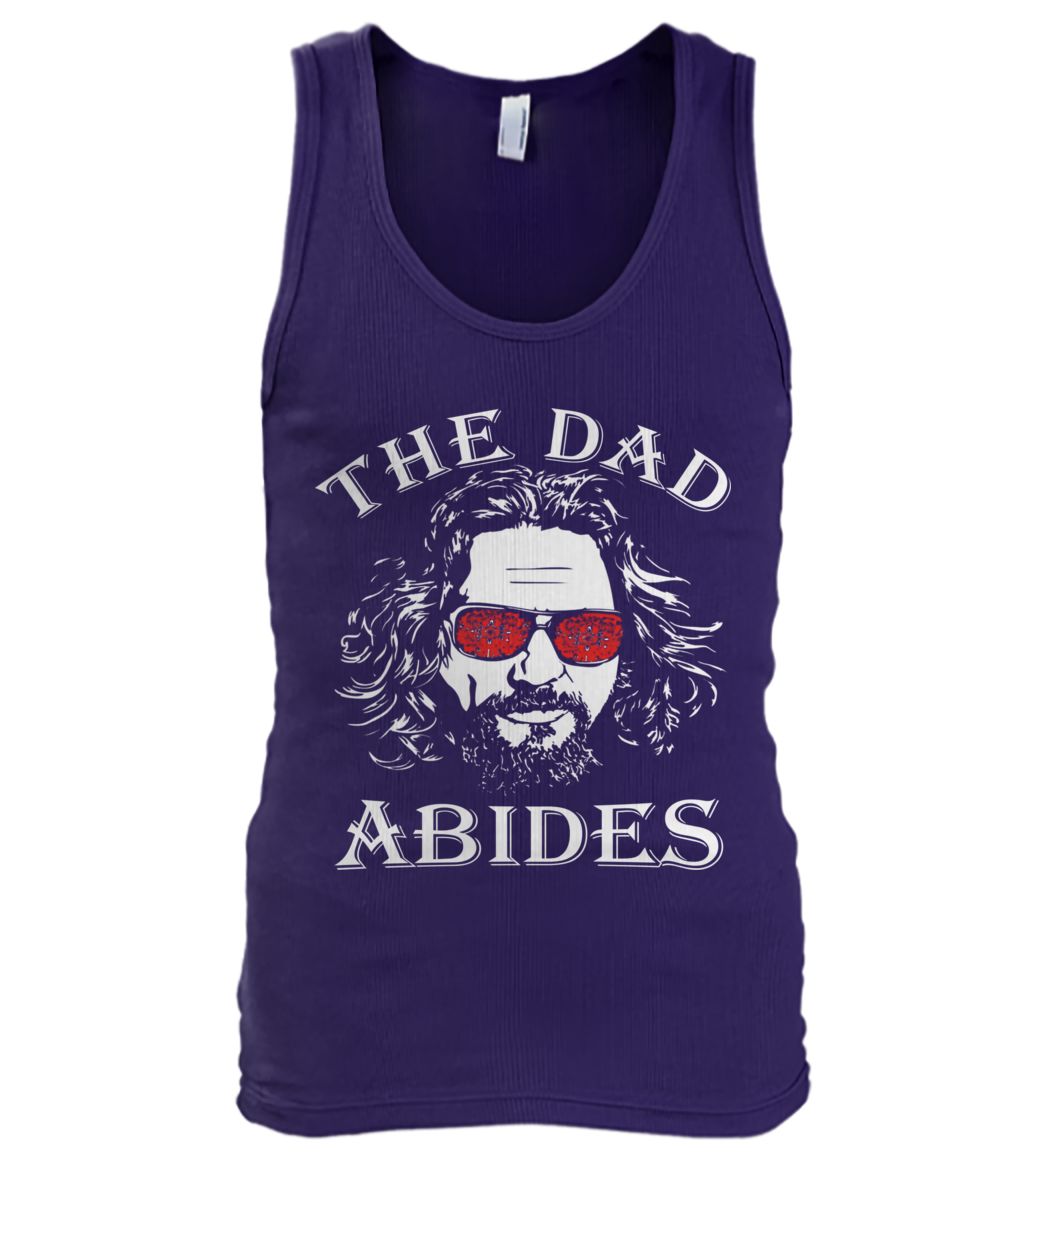 The dad abides men's tank top